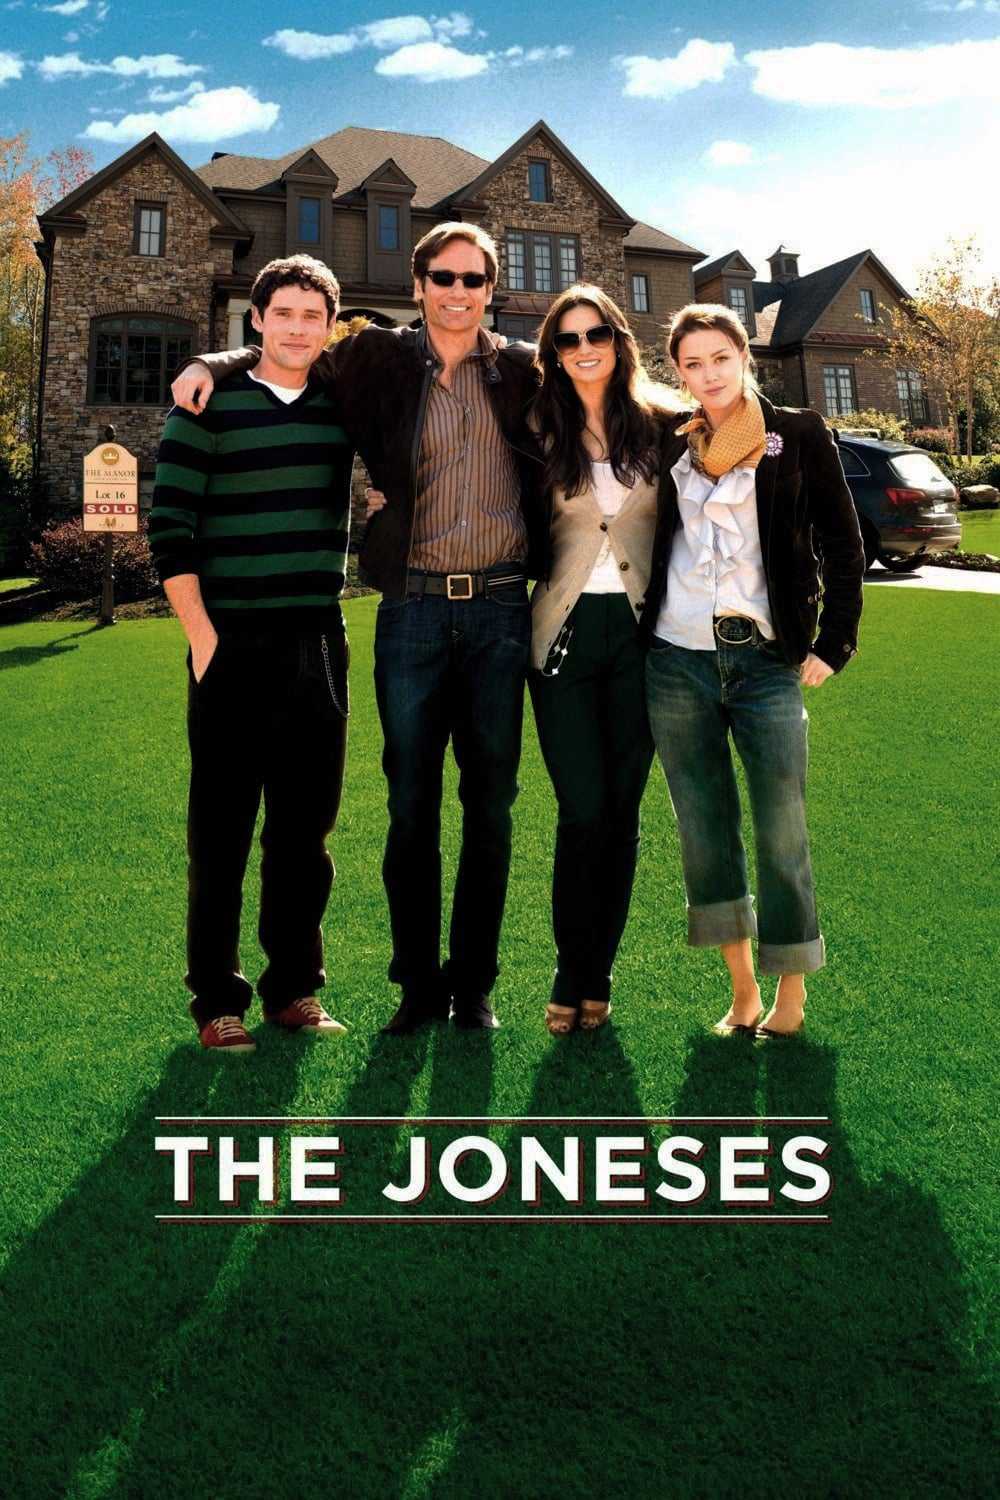 The joneses - The joneses